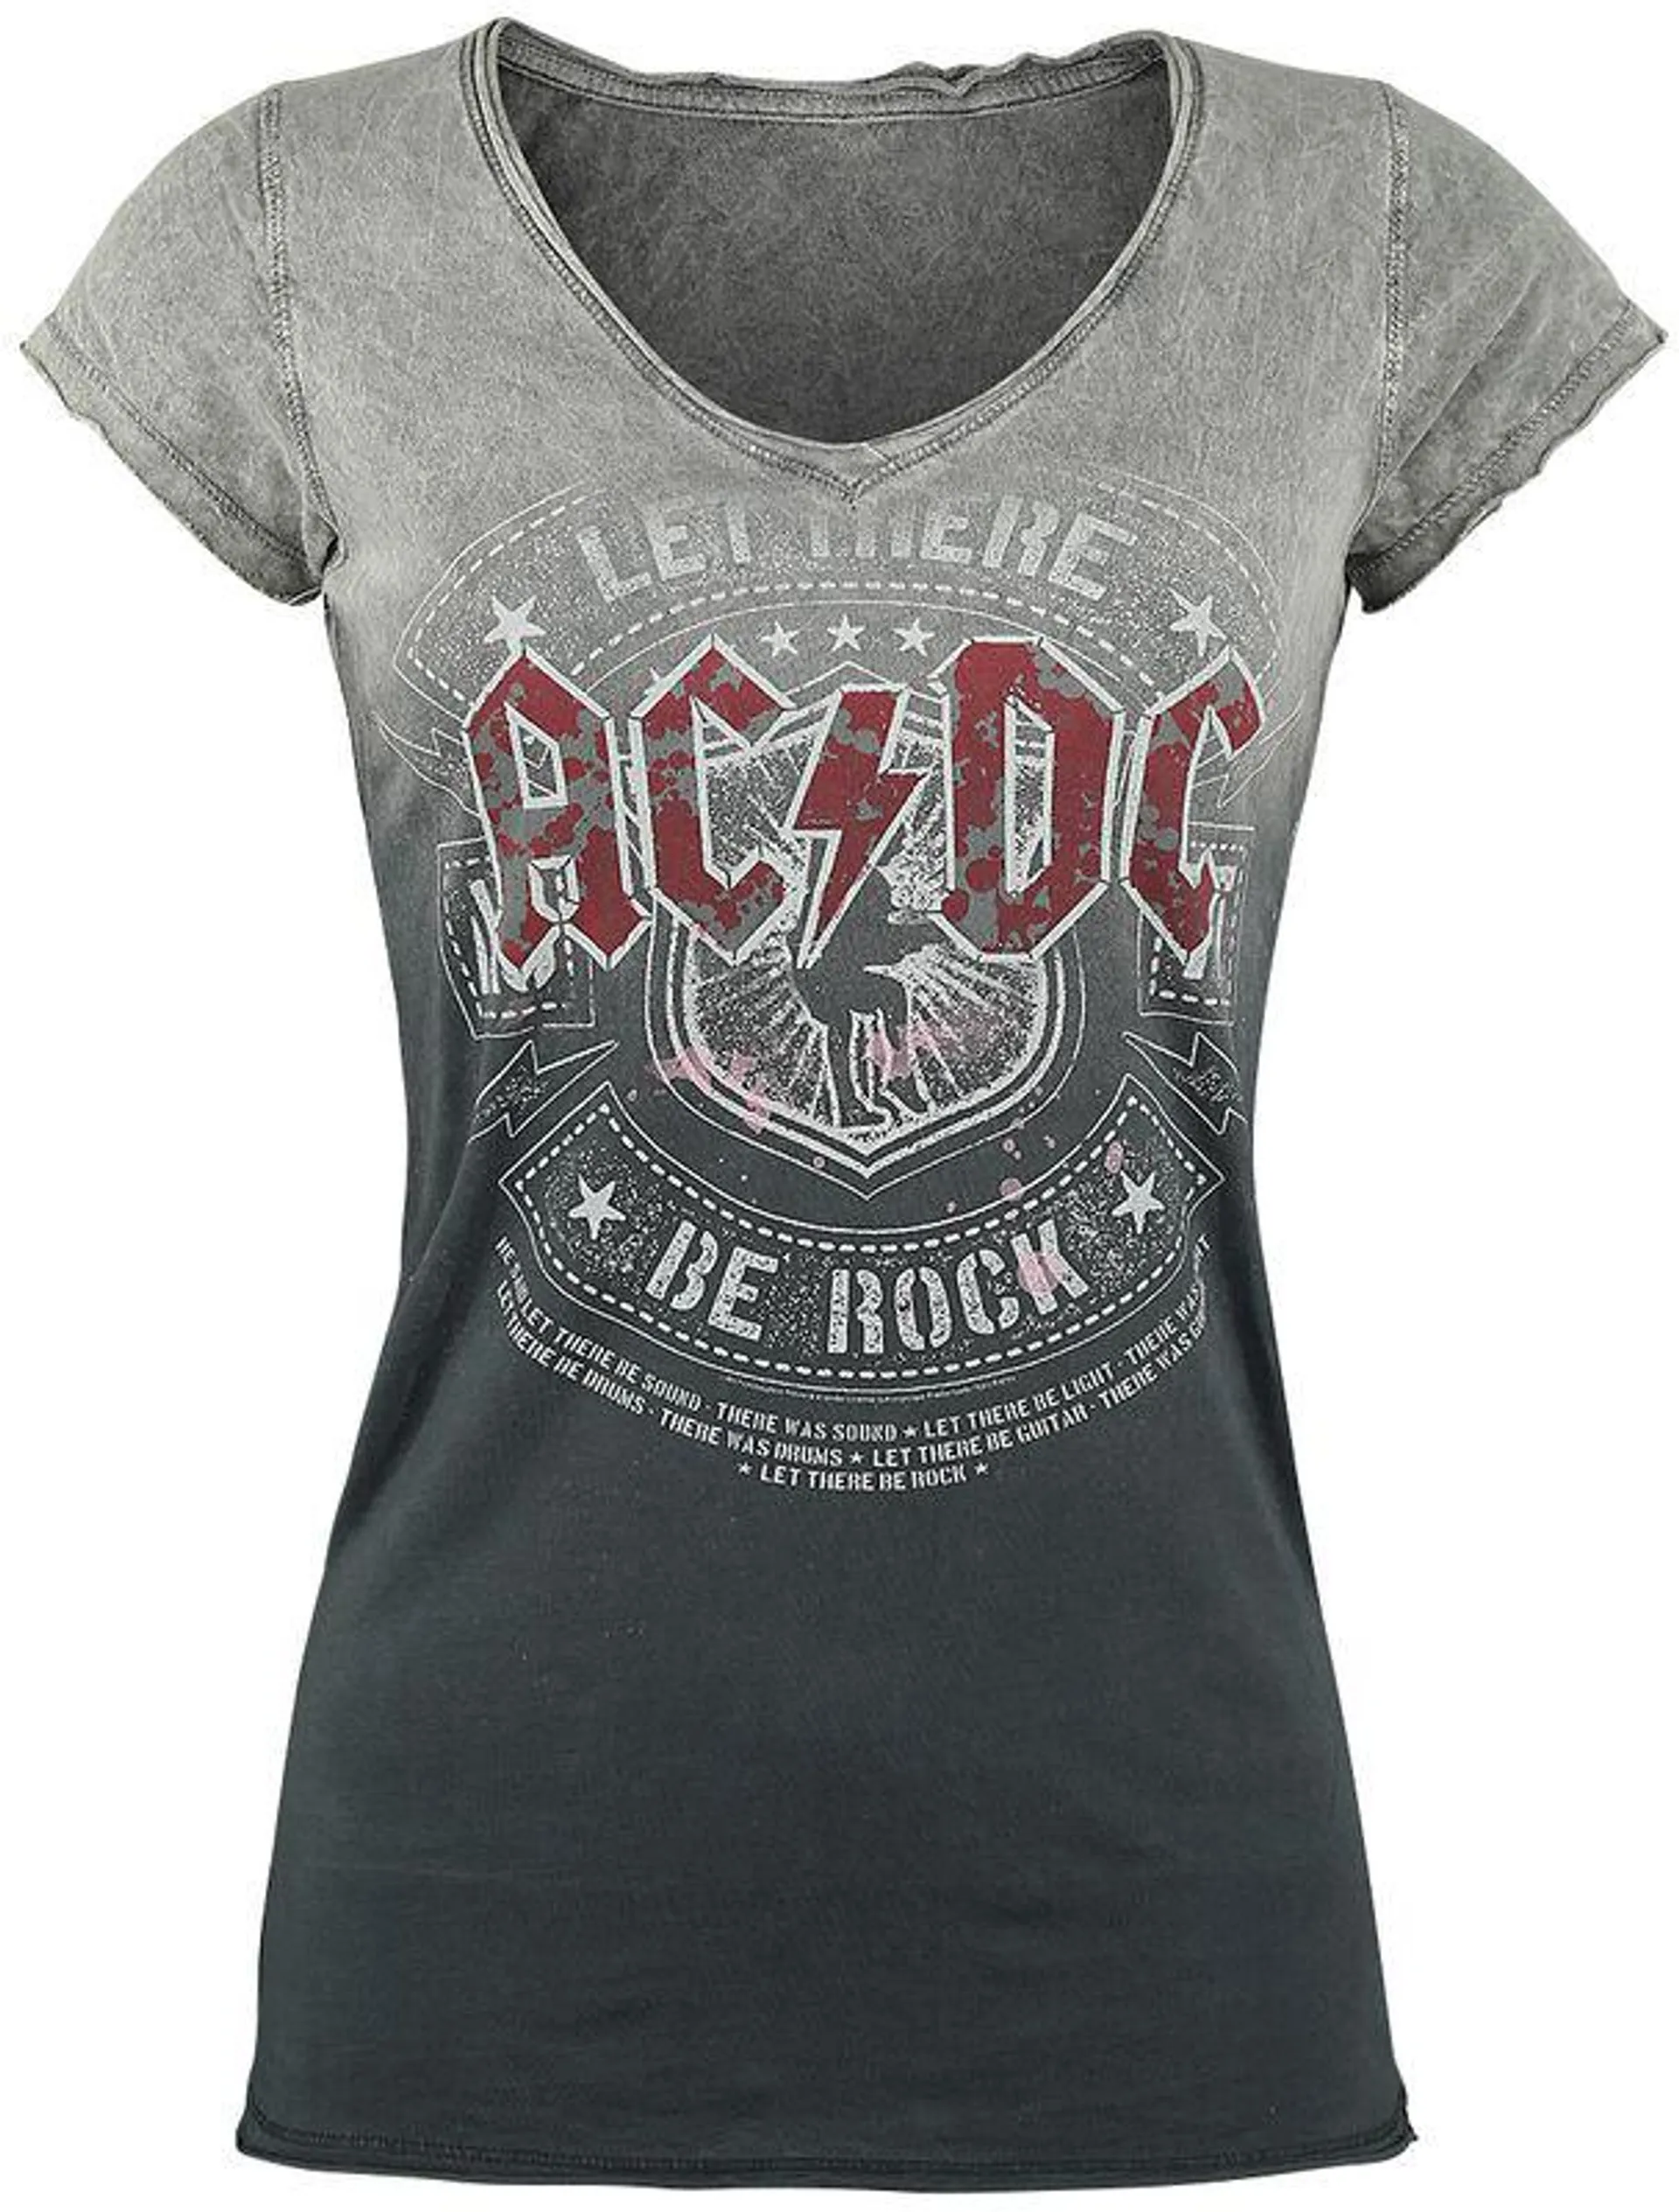 Let There Be Rock | T-Shirt | grigio/grigio scuro | AC/DC